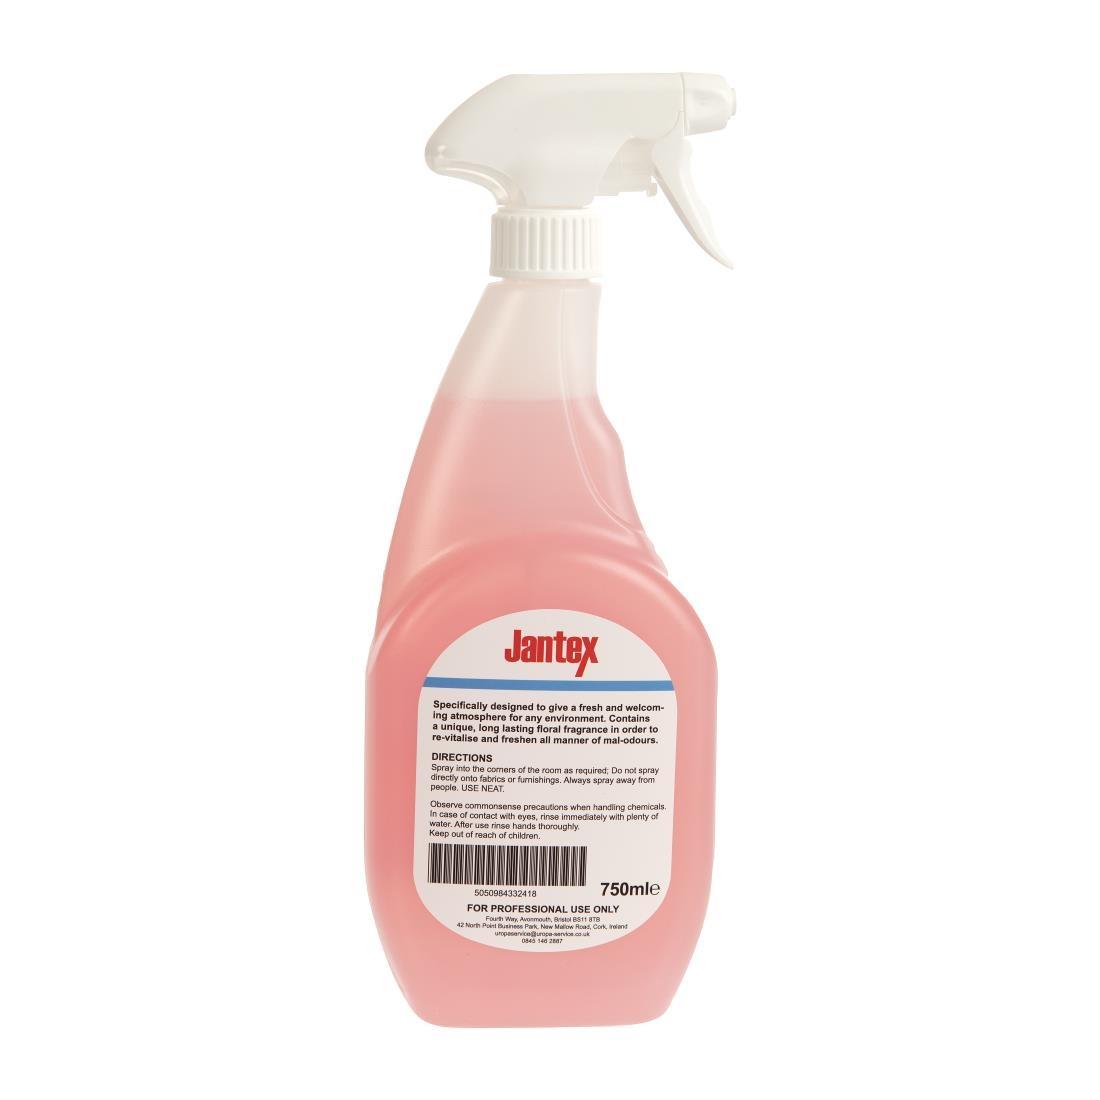 Jantex Air Freshener Spray Ready To Use 750ml - GG186  - 3